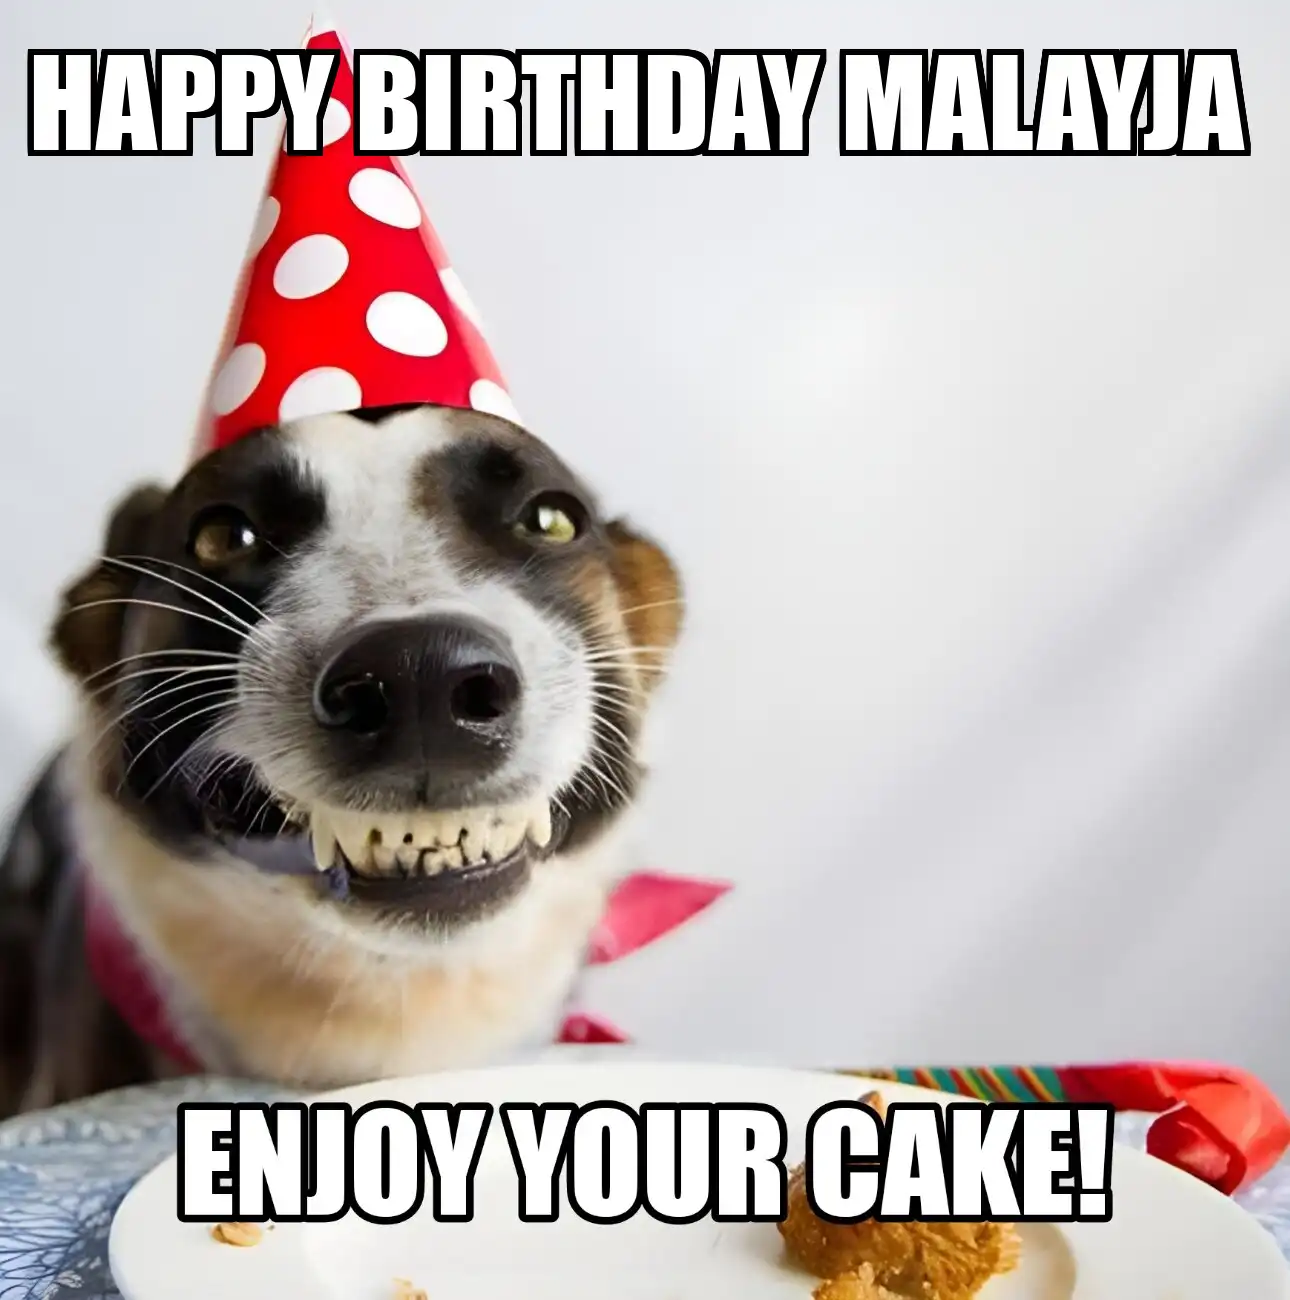 Happy Birthday Malayja Enjoy Your Cake Dog Meme